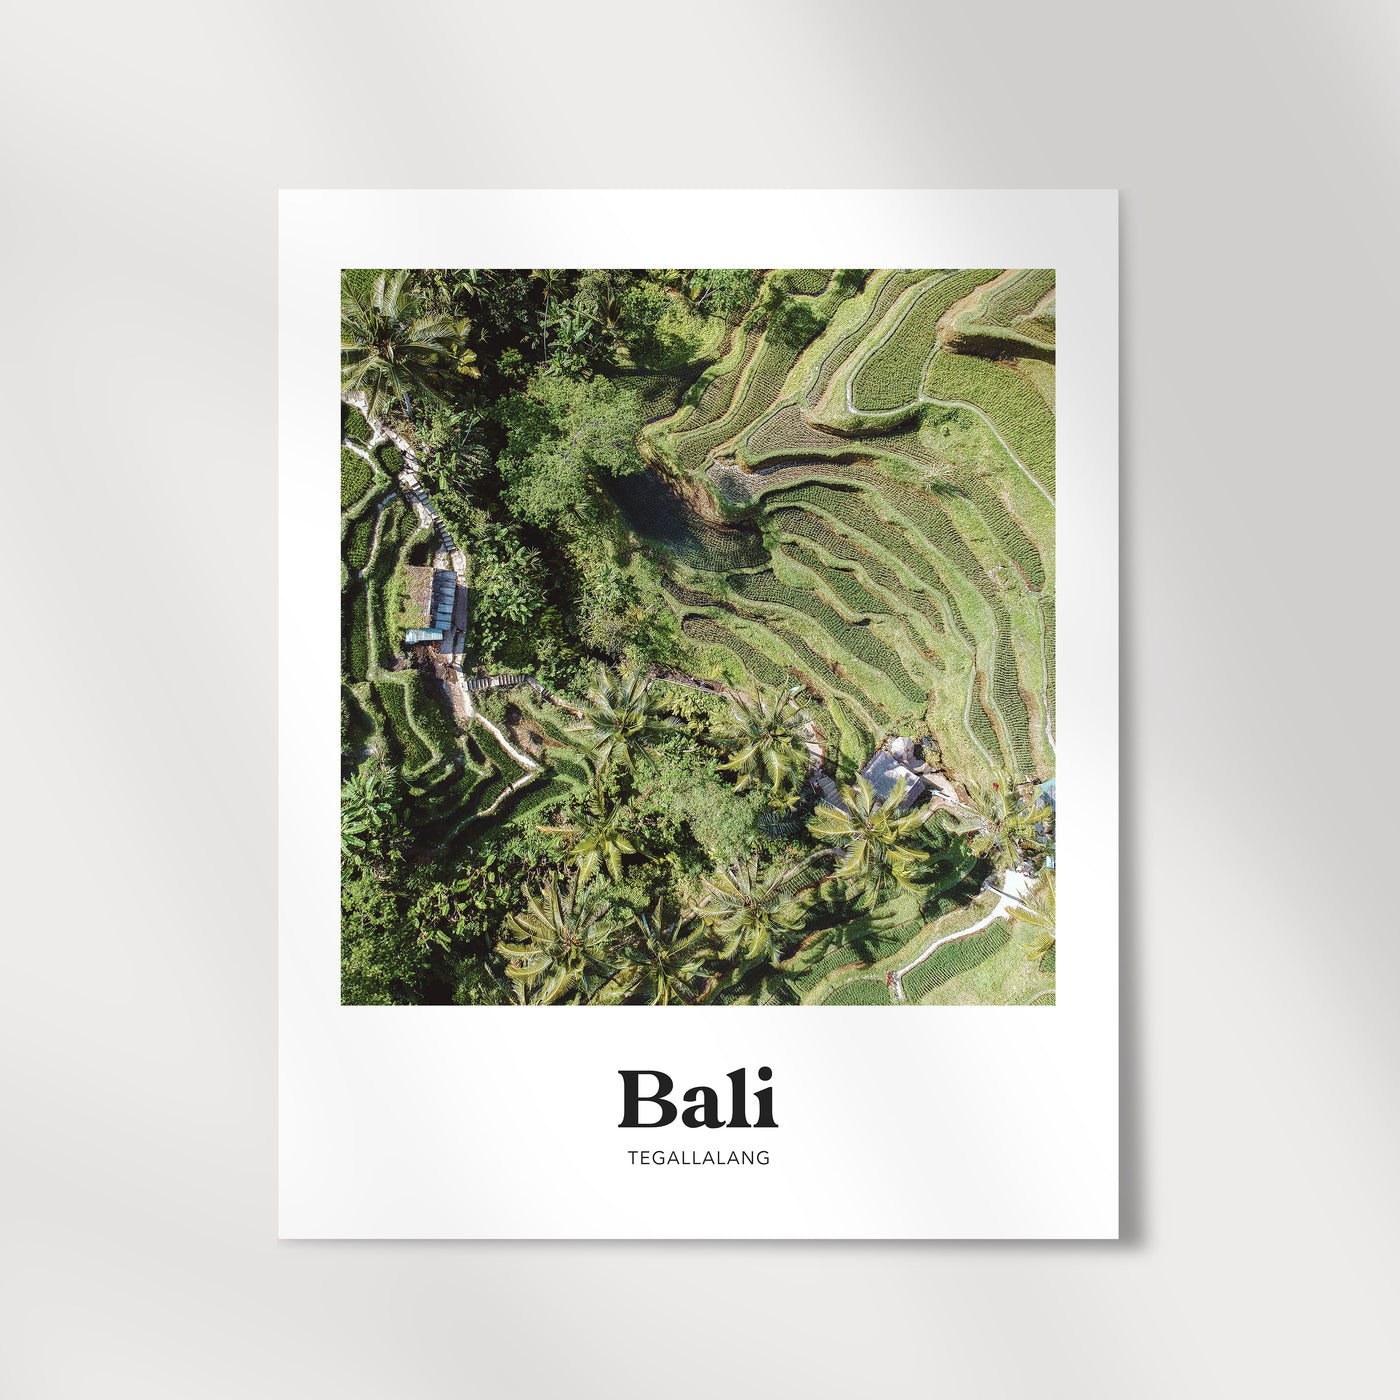 Bali - Ubud Tegallalang Rice Terrace Print